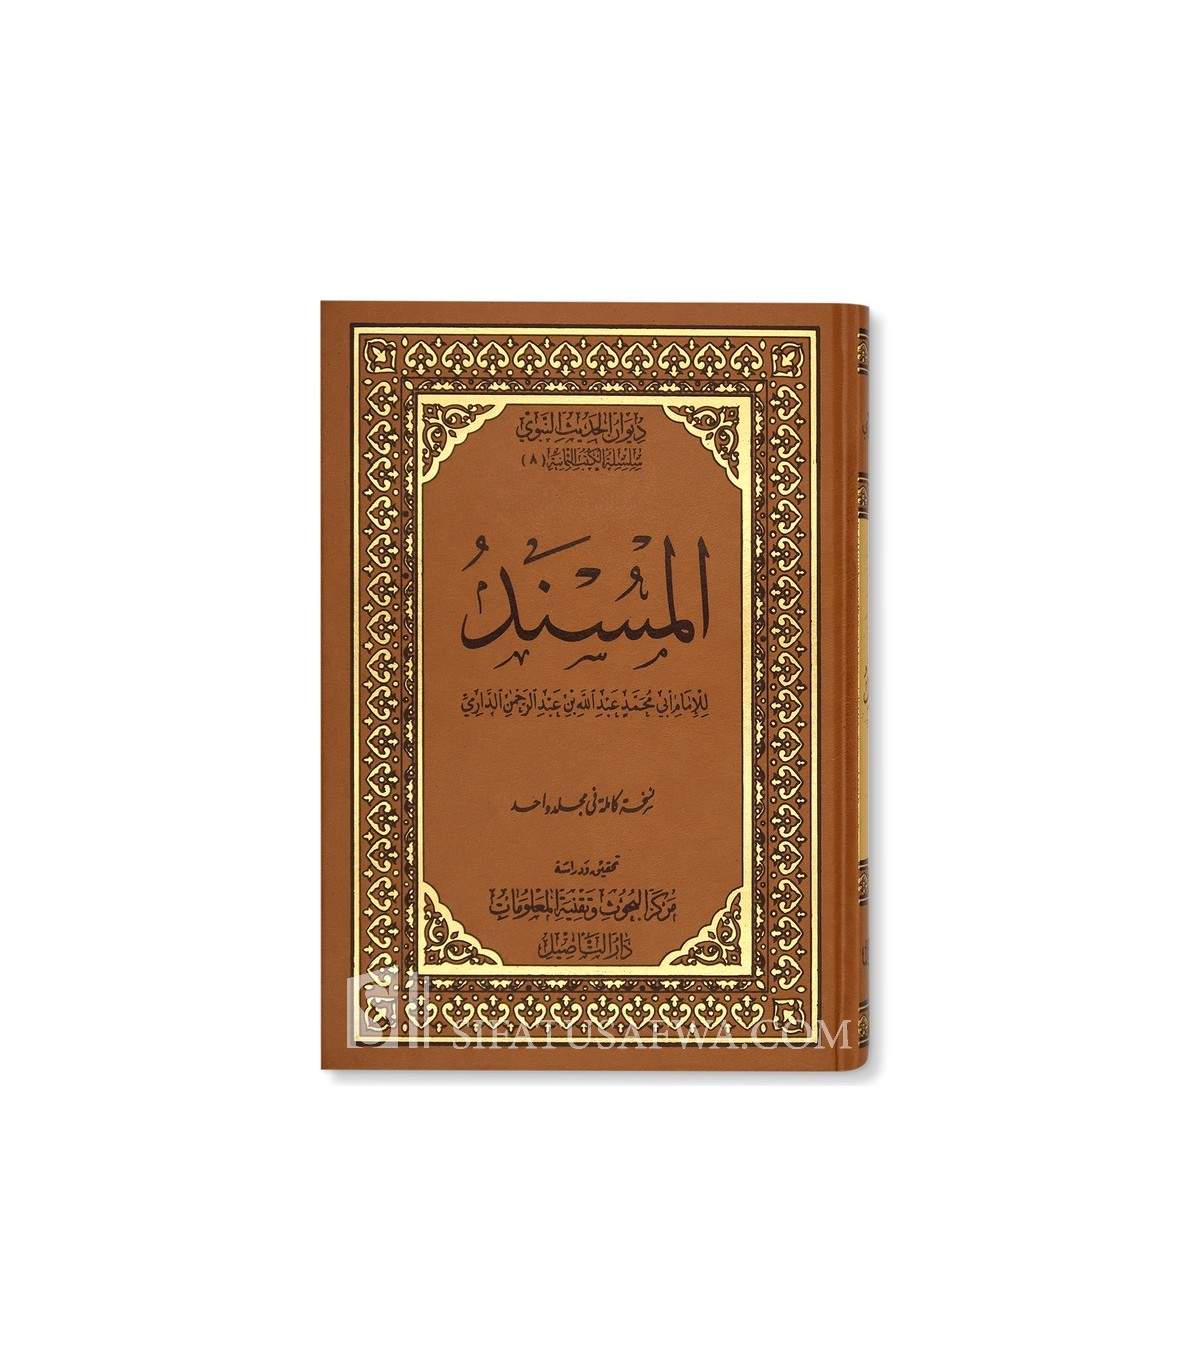 Biography of Imam Ad-Darimi